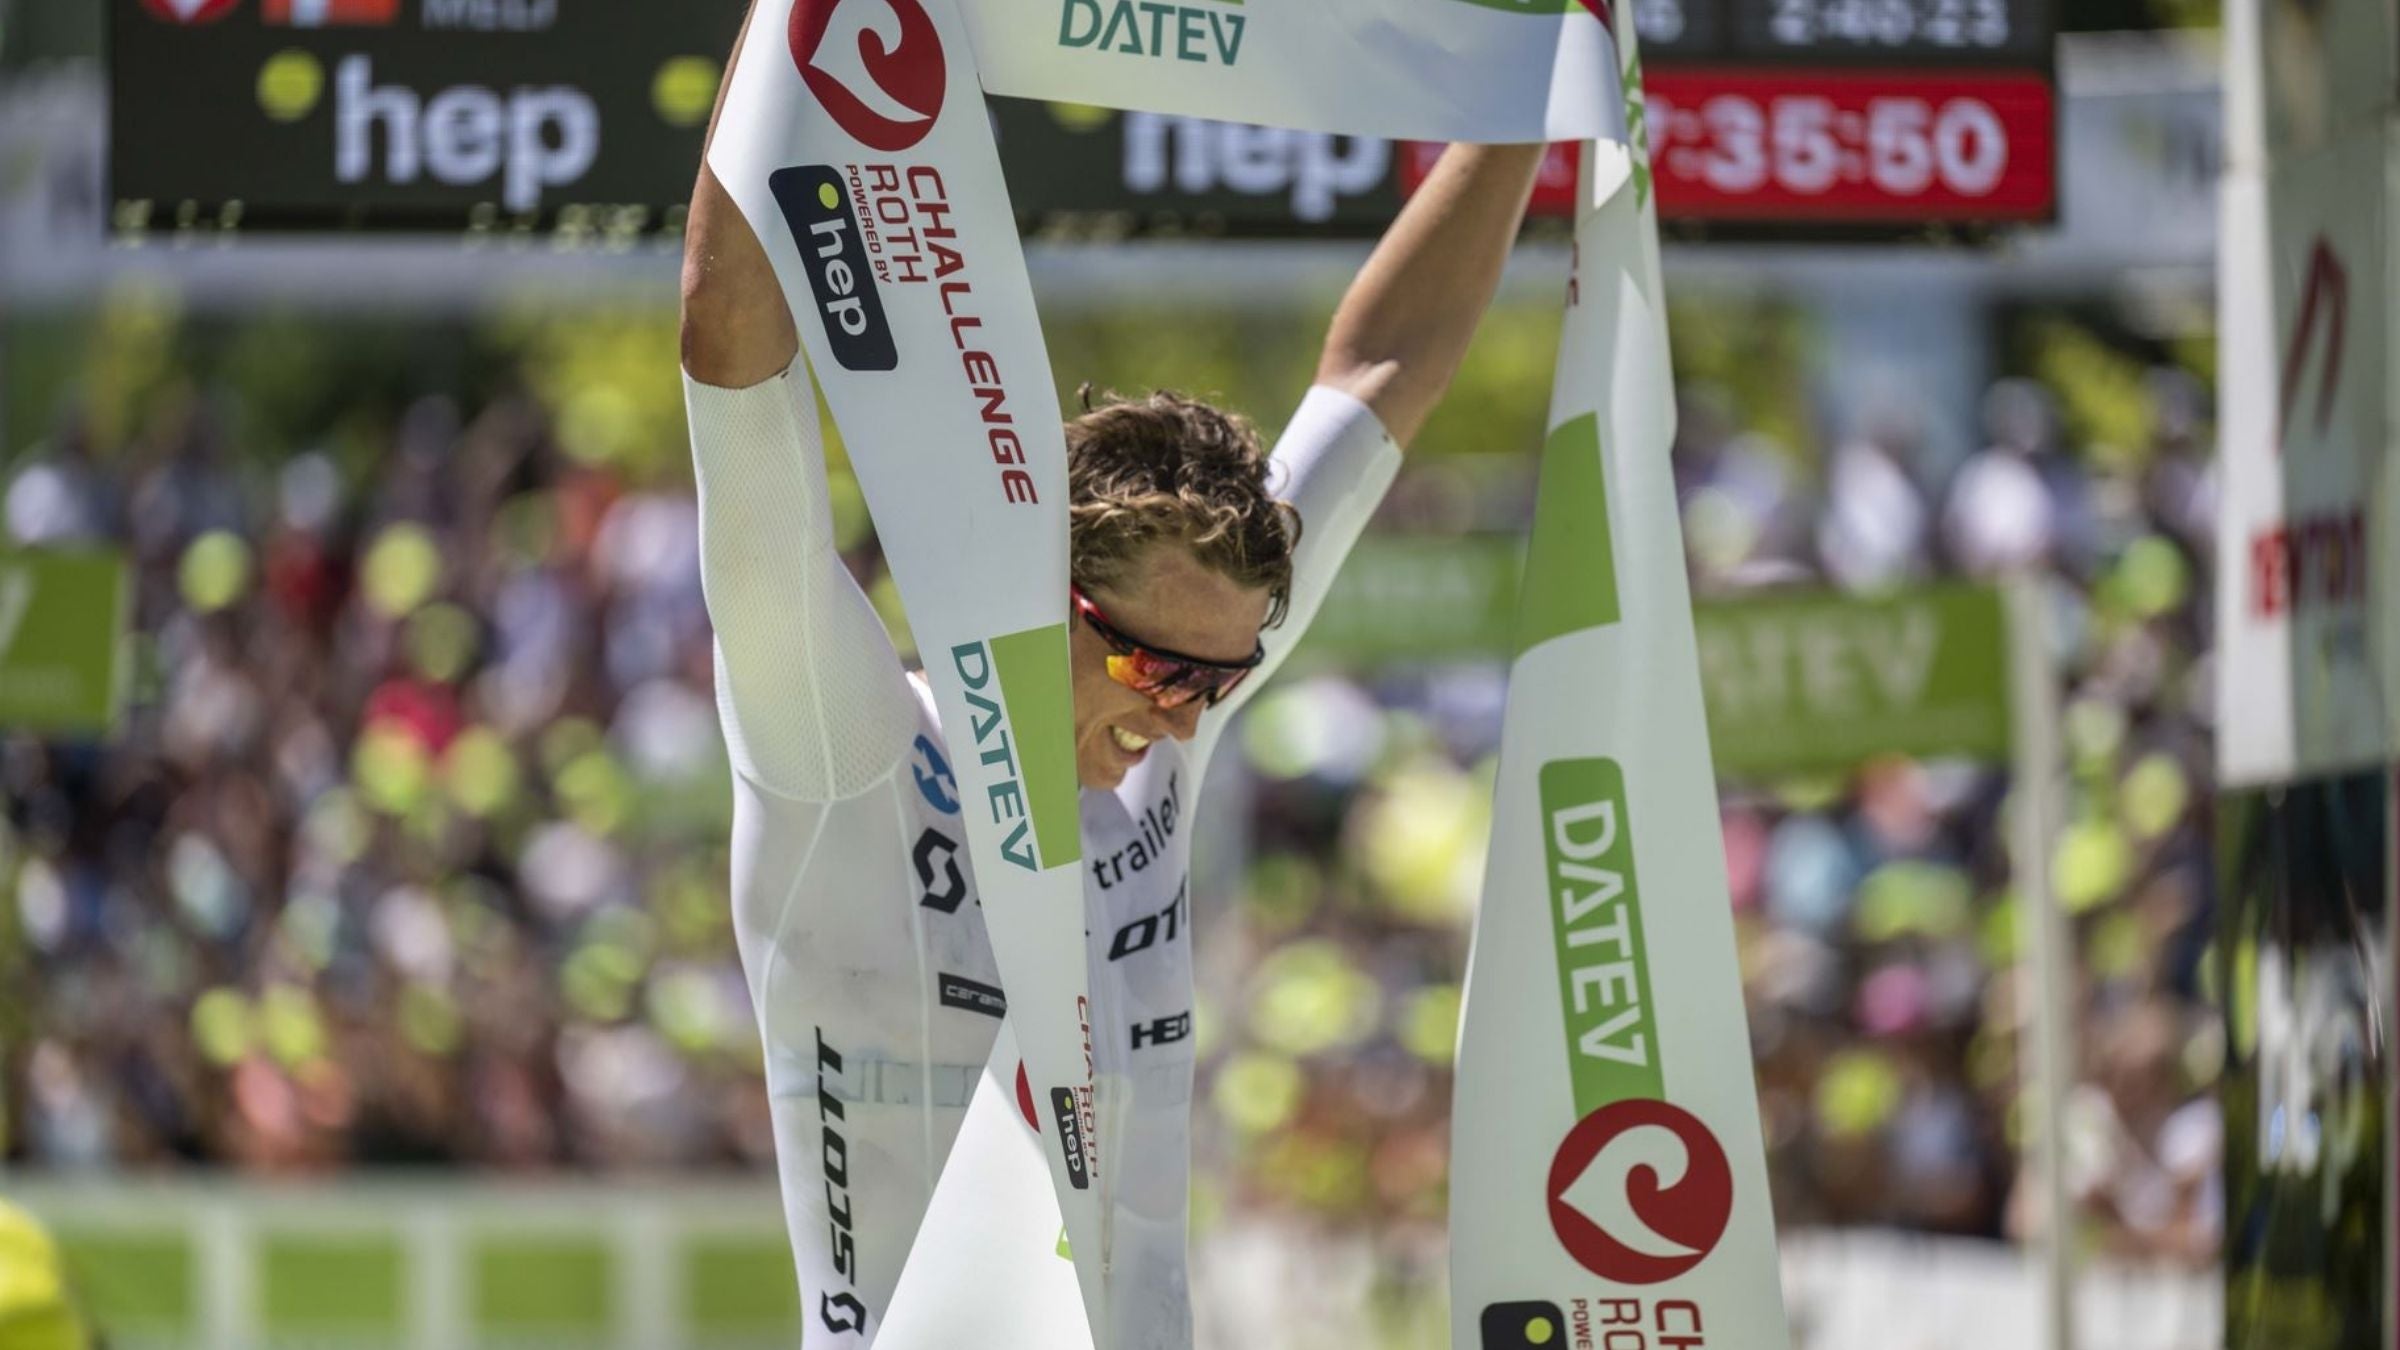 Magnus Ditlev will race the Ironman world championship kona men's pro race